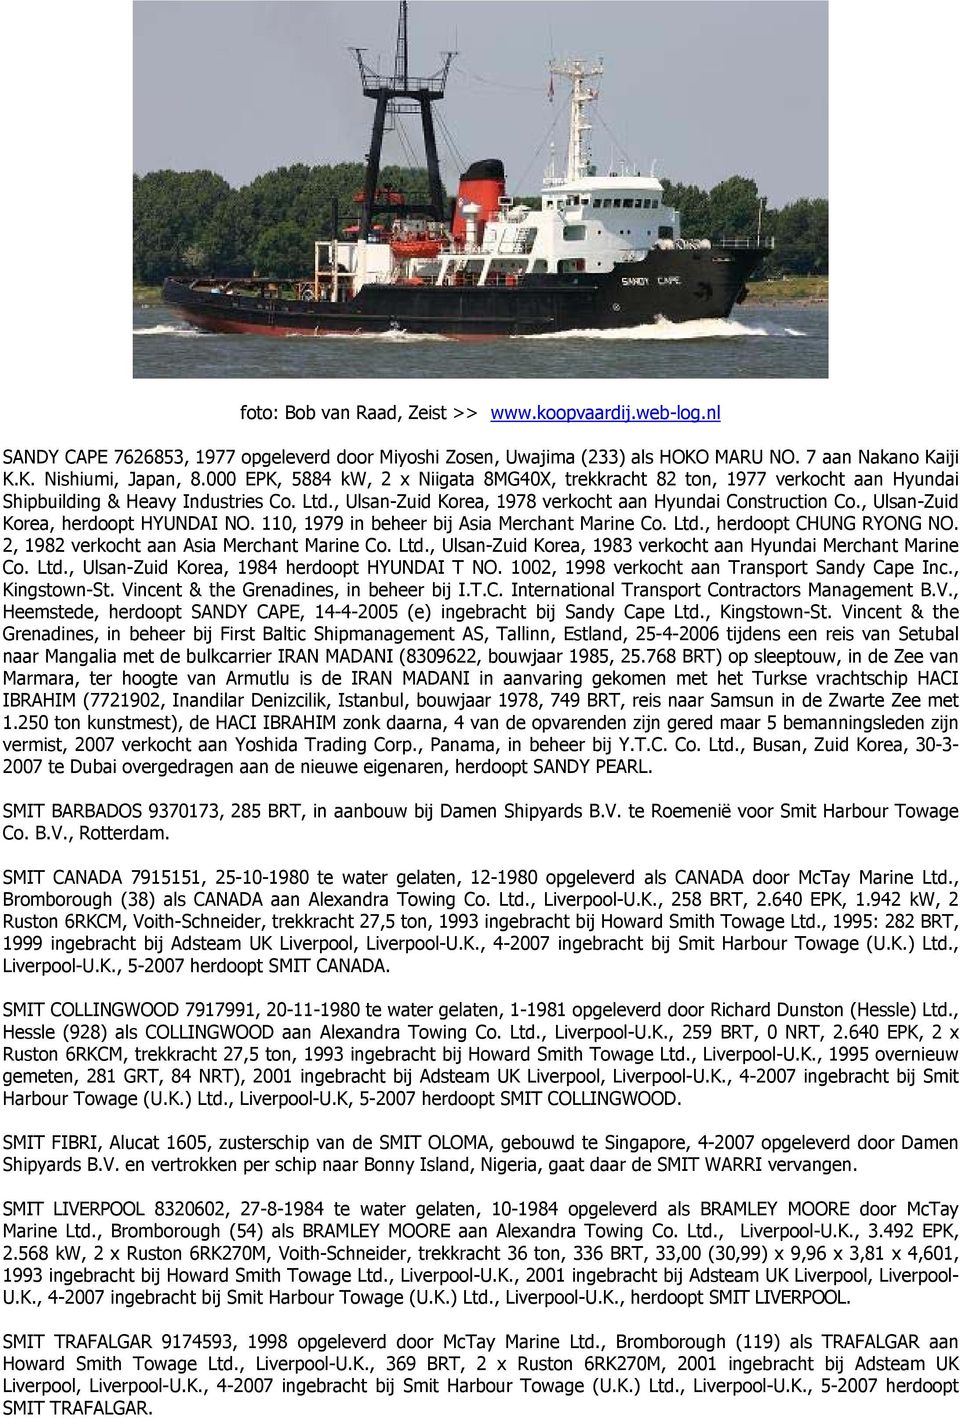 , Ulsan-Zuid Korea, herdoopt HYUNDAI NO. 110, 1979 in beheer bij Asia Merchant Marine Co. Ltd., herdoopt CHUNG RYONG NO. 2, 1982 verkocht aan Asia Merchant Marine Co. Ltd., Ulsan-Zuid Korea, 1983 verkocht aan Hyundai Merchant Marine Co.